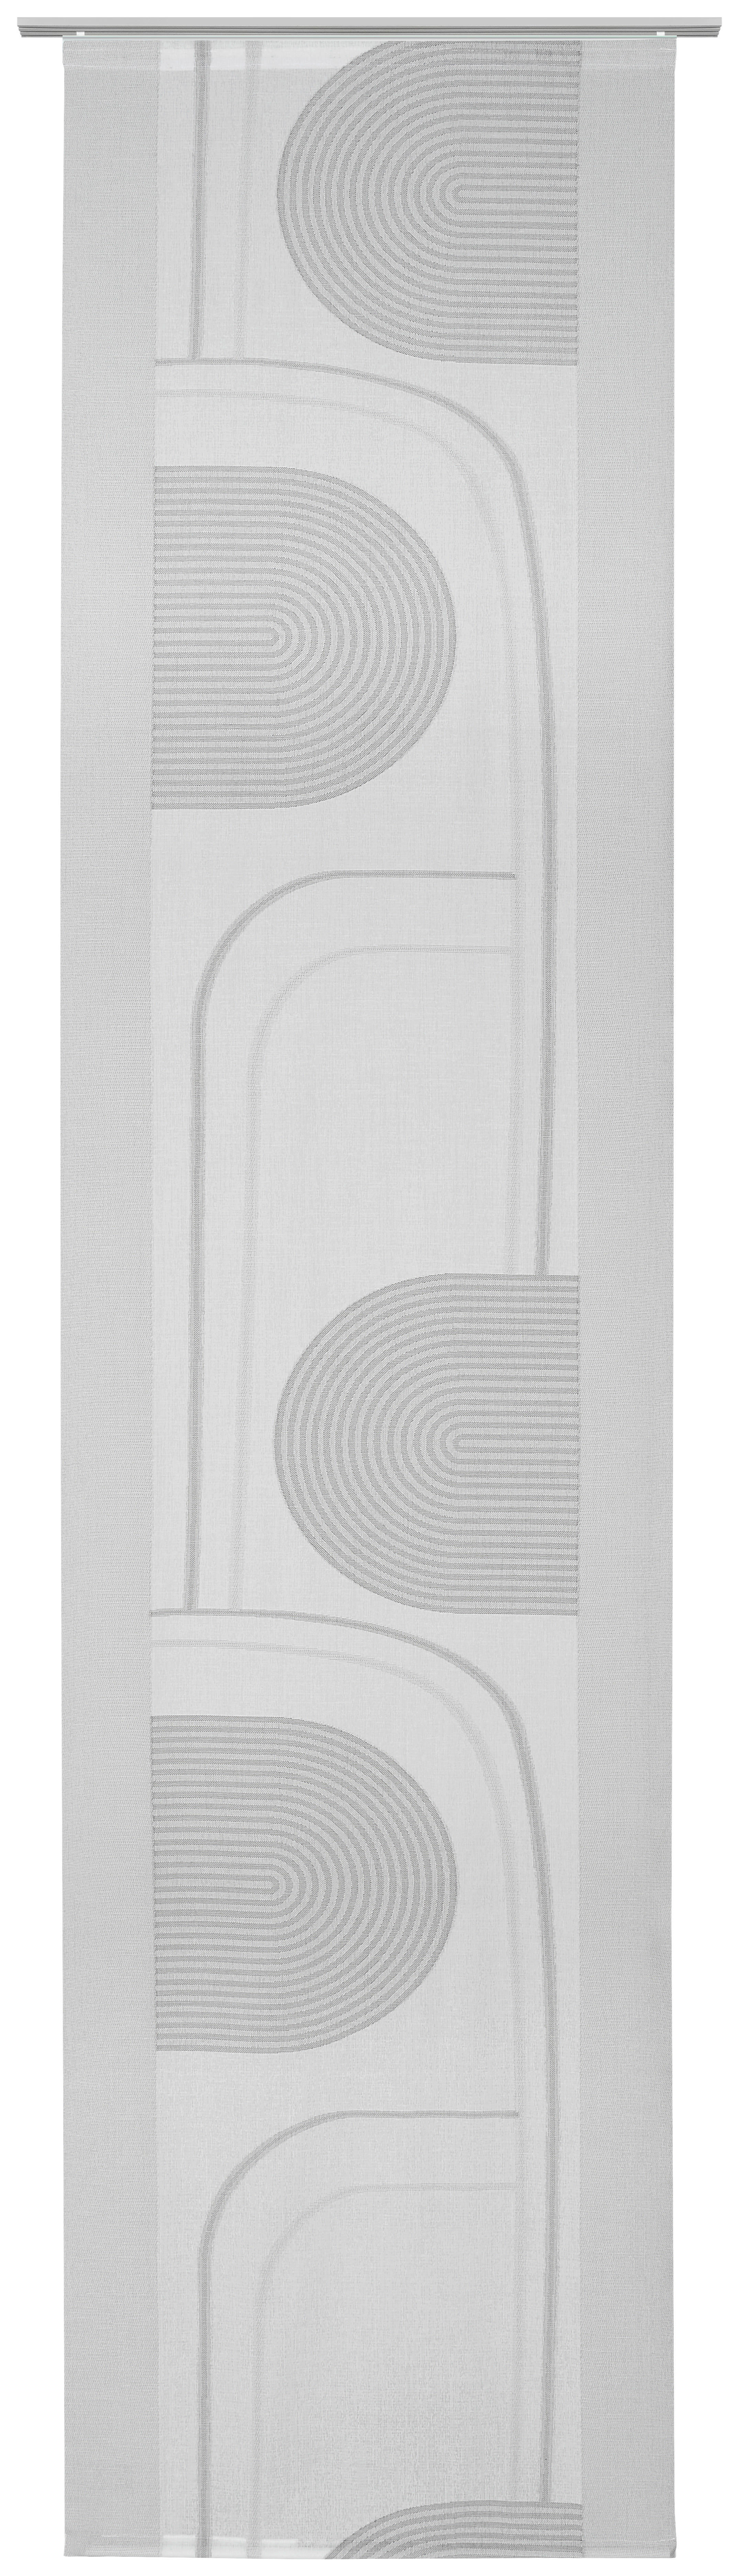 FLÄCHENVORHANG   halbtransparent   60/255 cm  - Grau, MODERN, Textil (60/255cm) - Novel